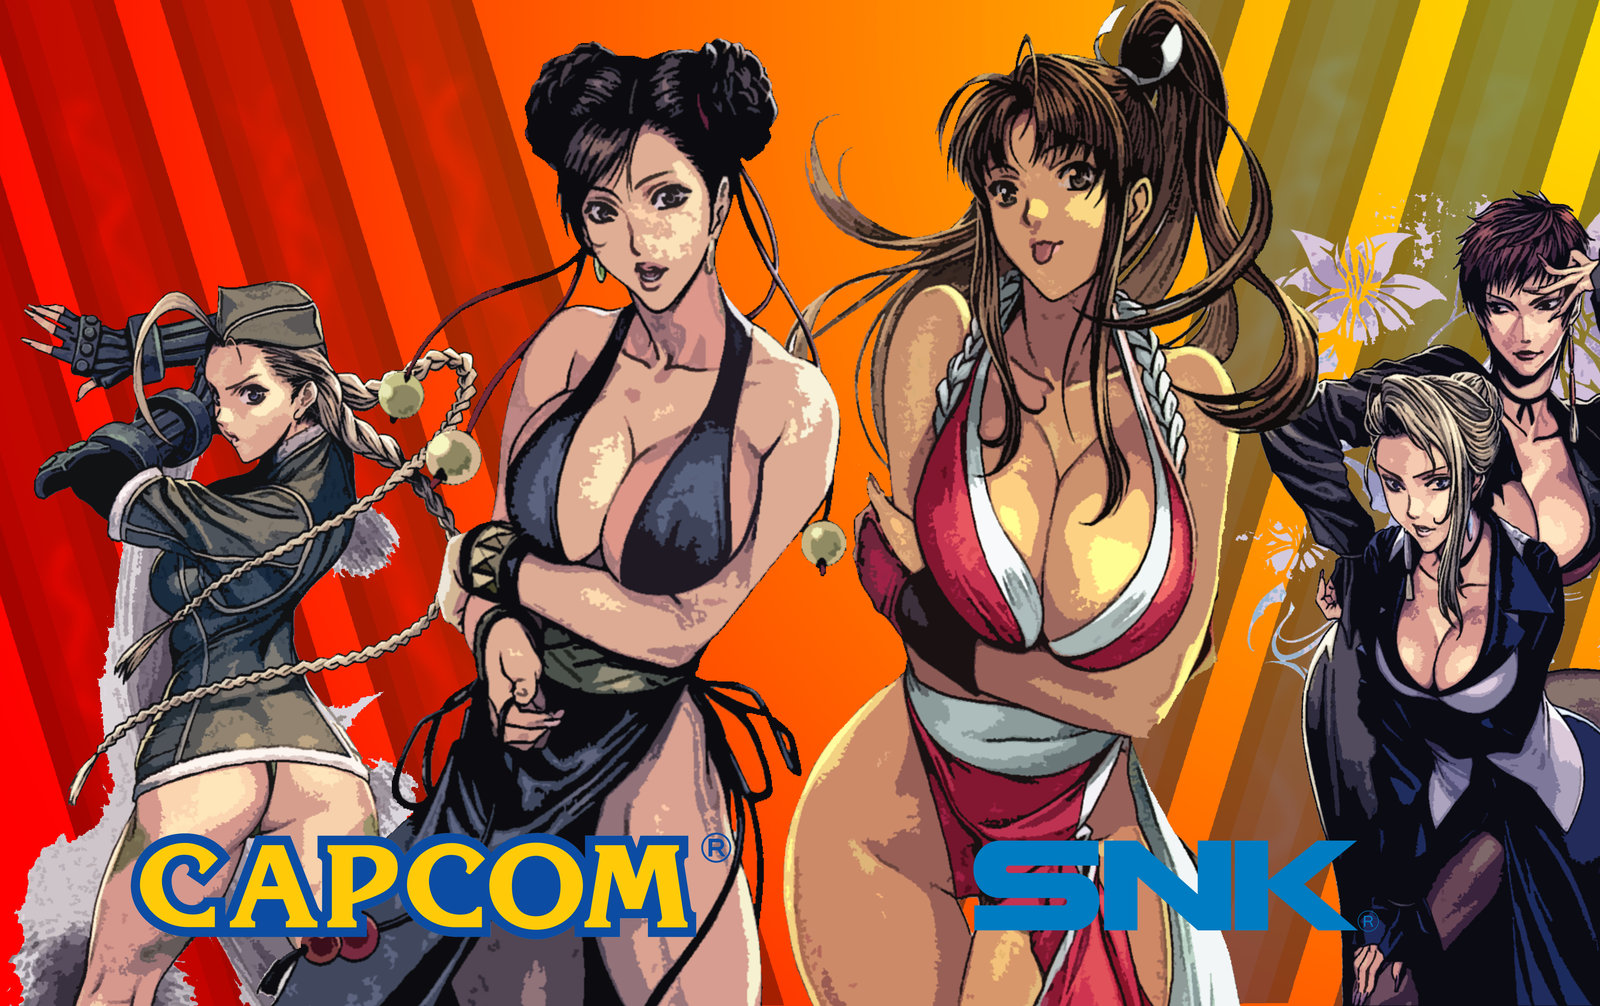 Amazing Capcom Vs. SNK Pictures & Backgrounds